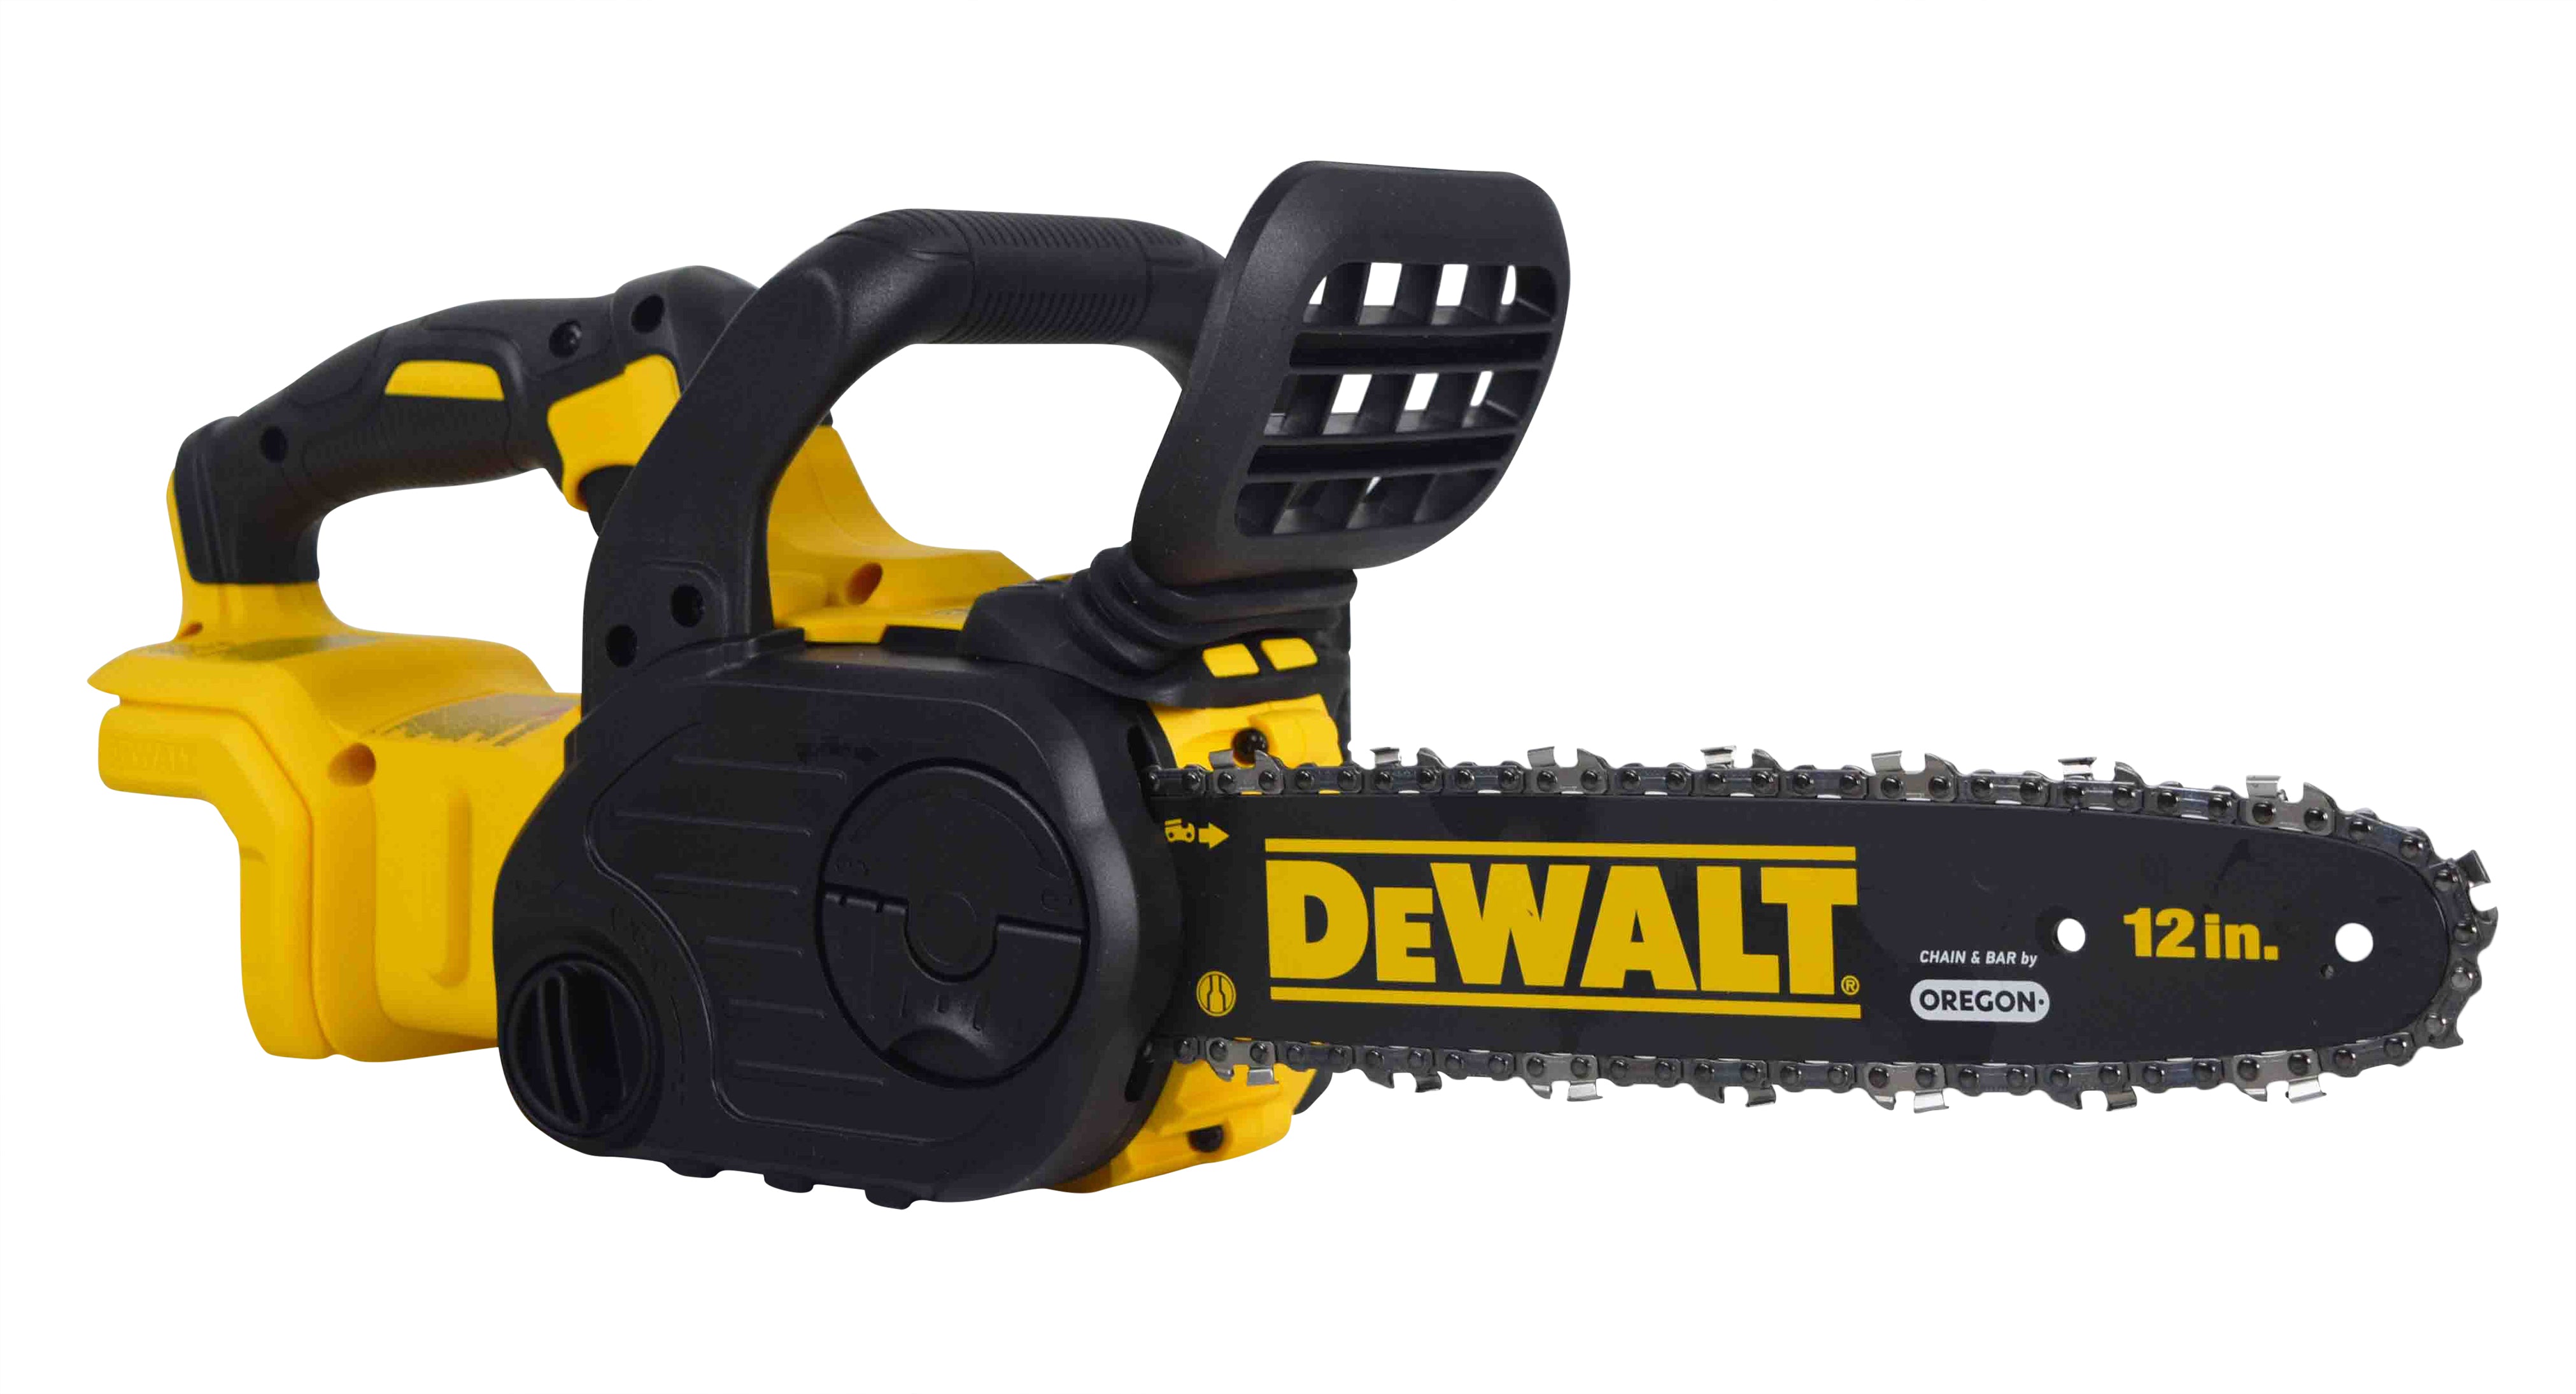 Dewalt-DCCS620P1-20V-MAX-5.0-Ah-Cordless-Lithium-Ion-Compact-Chainsaw-Kit-image-3